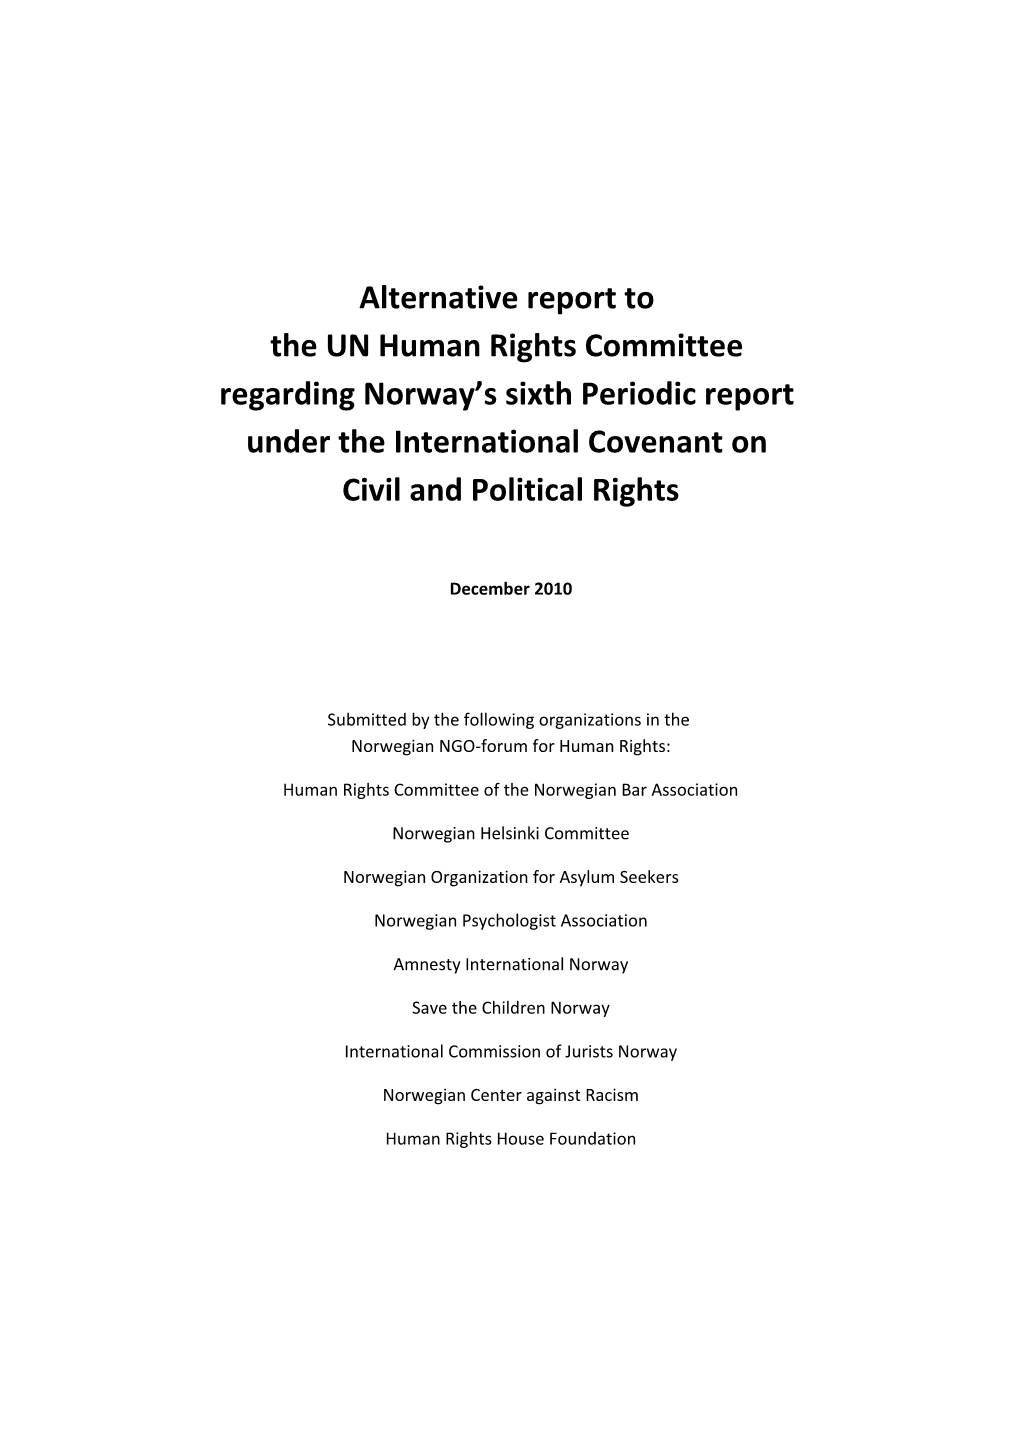 Alternative Report To